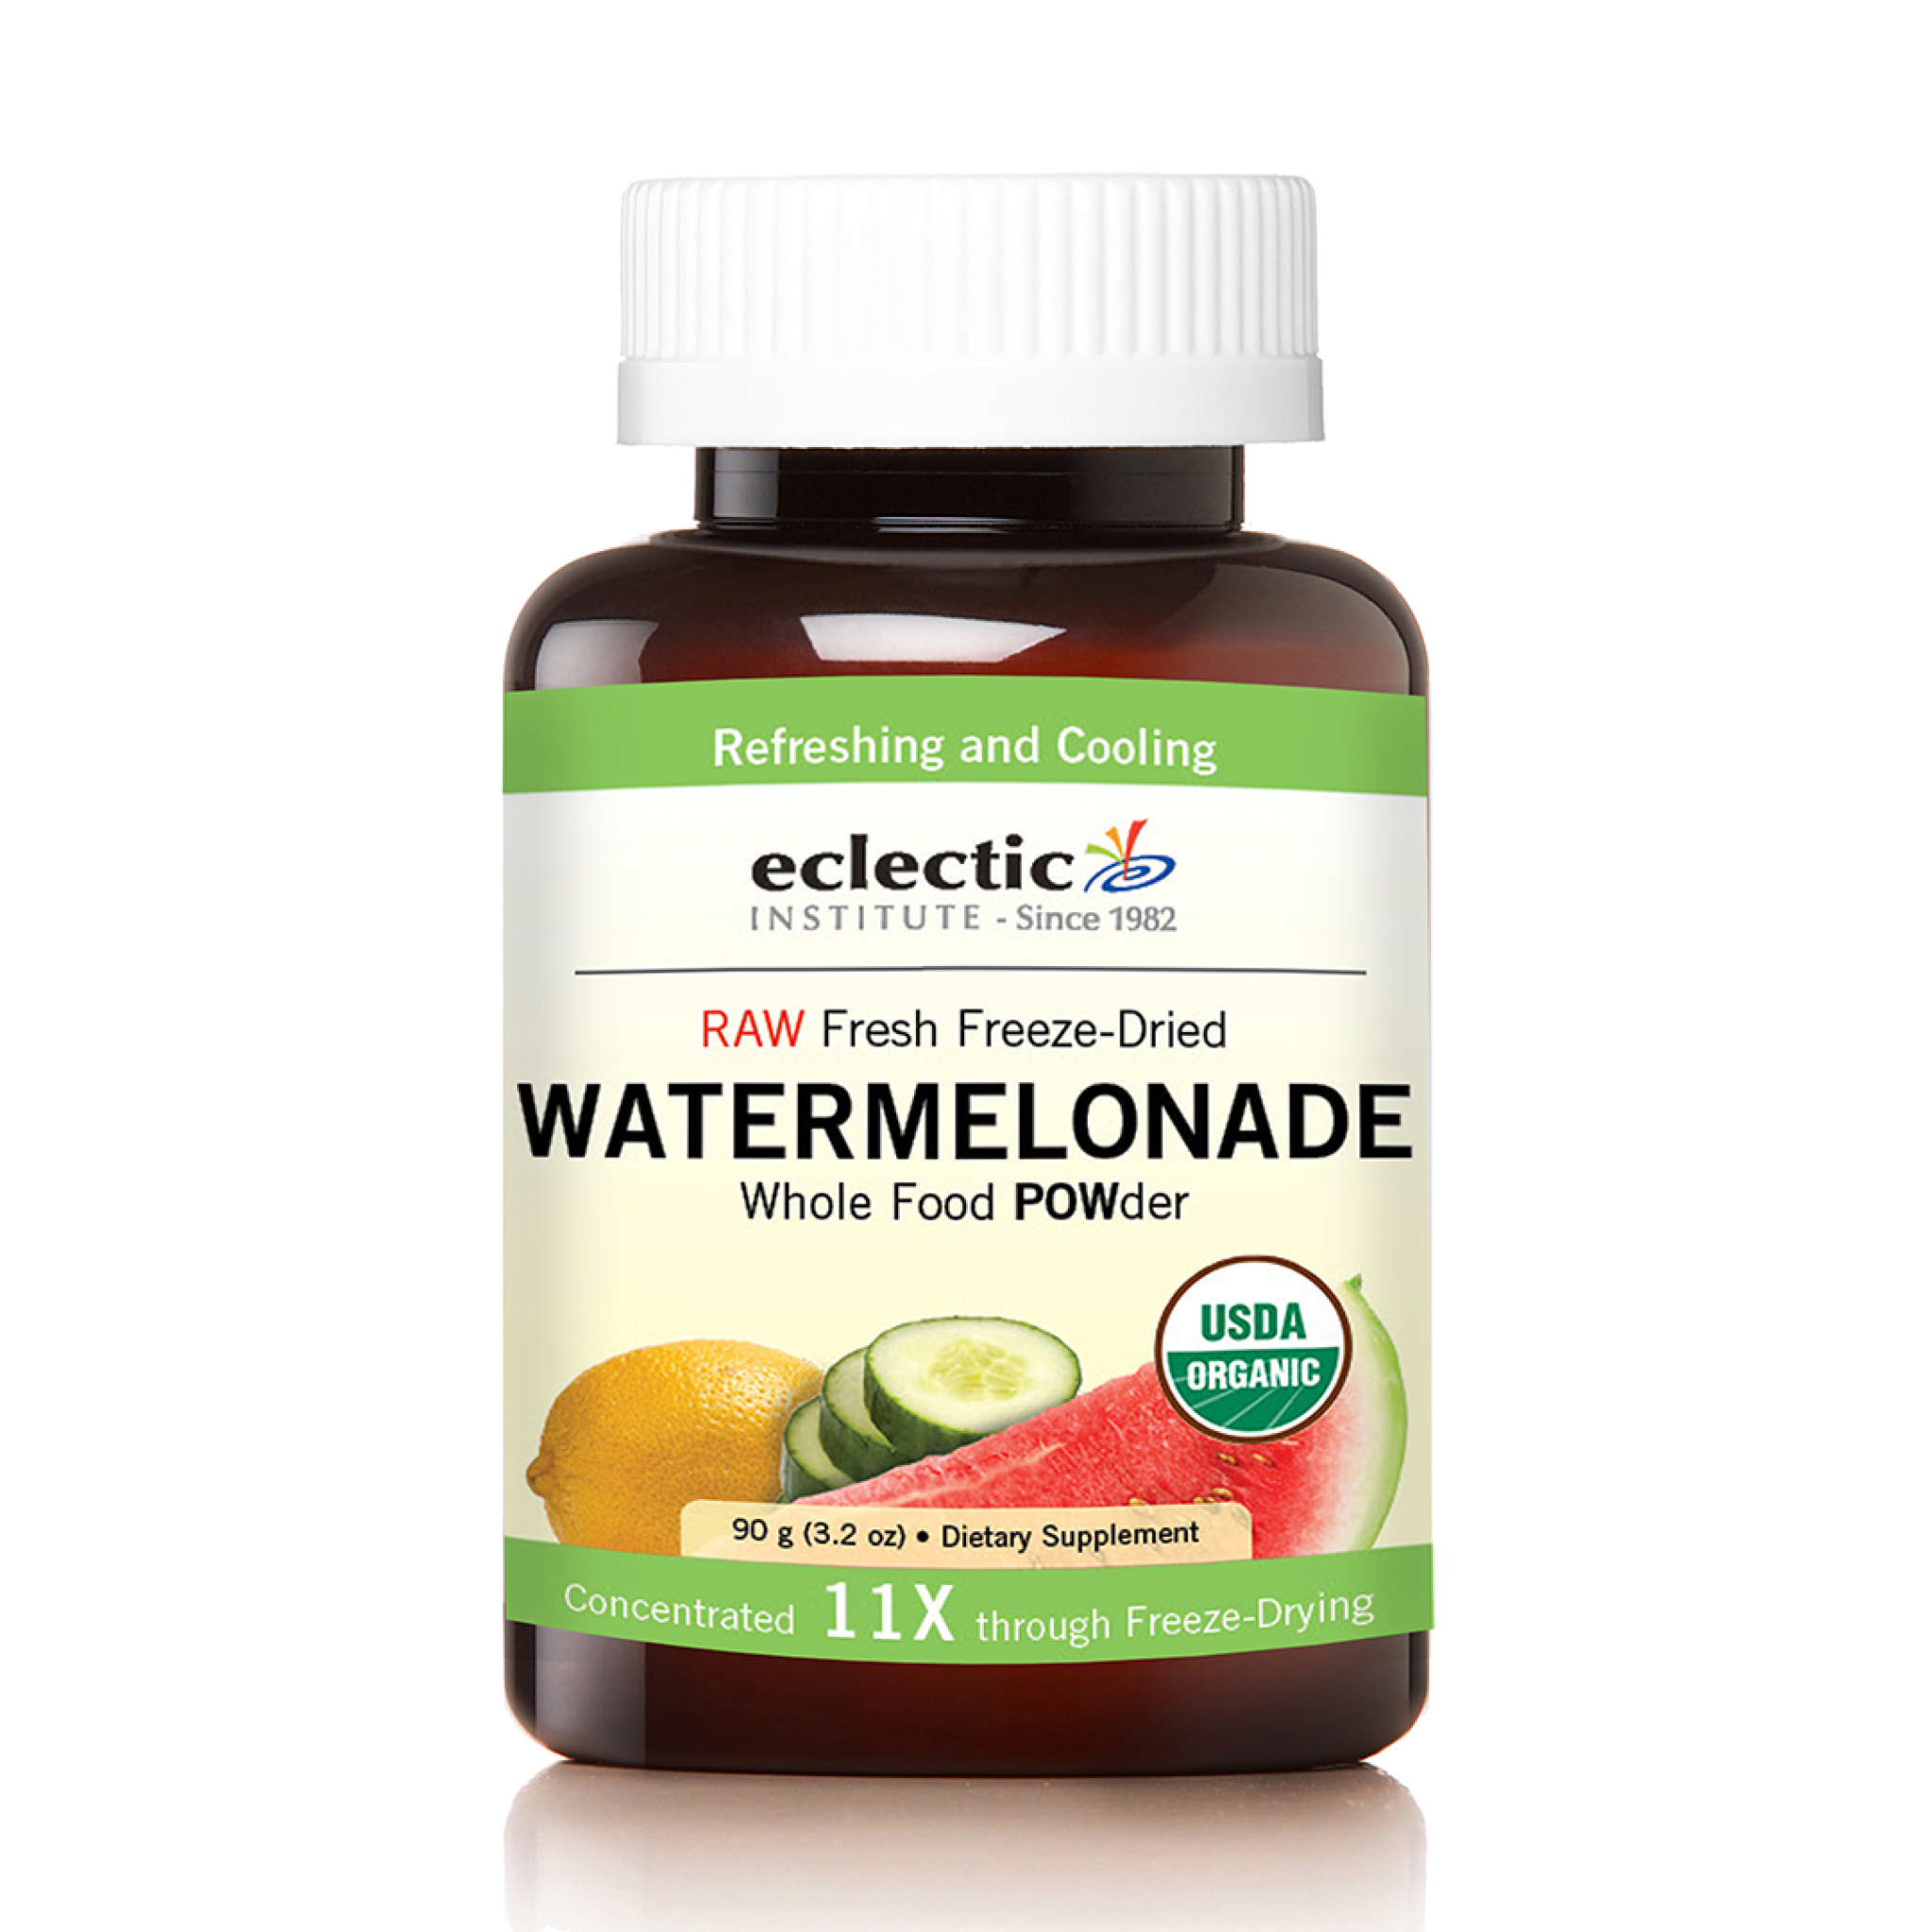 Eclectic Institute - Watermelonade powder